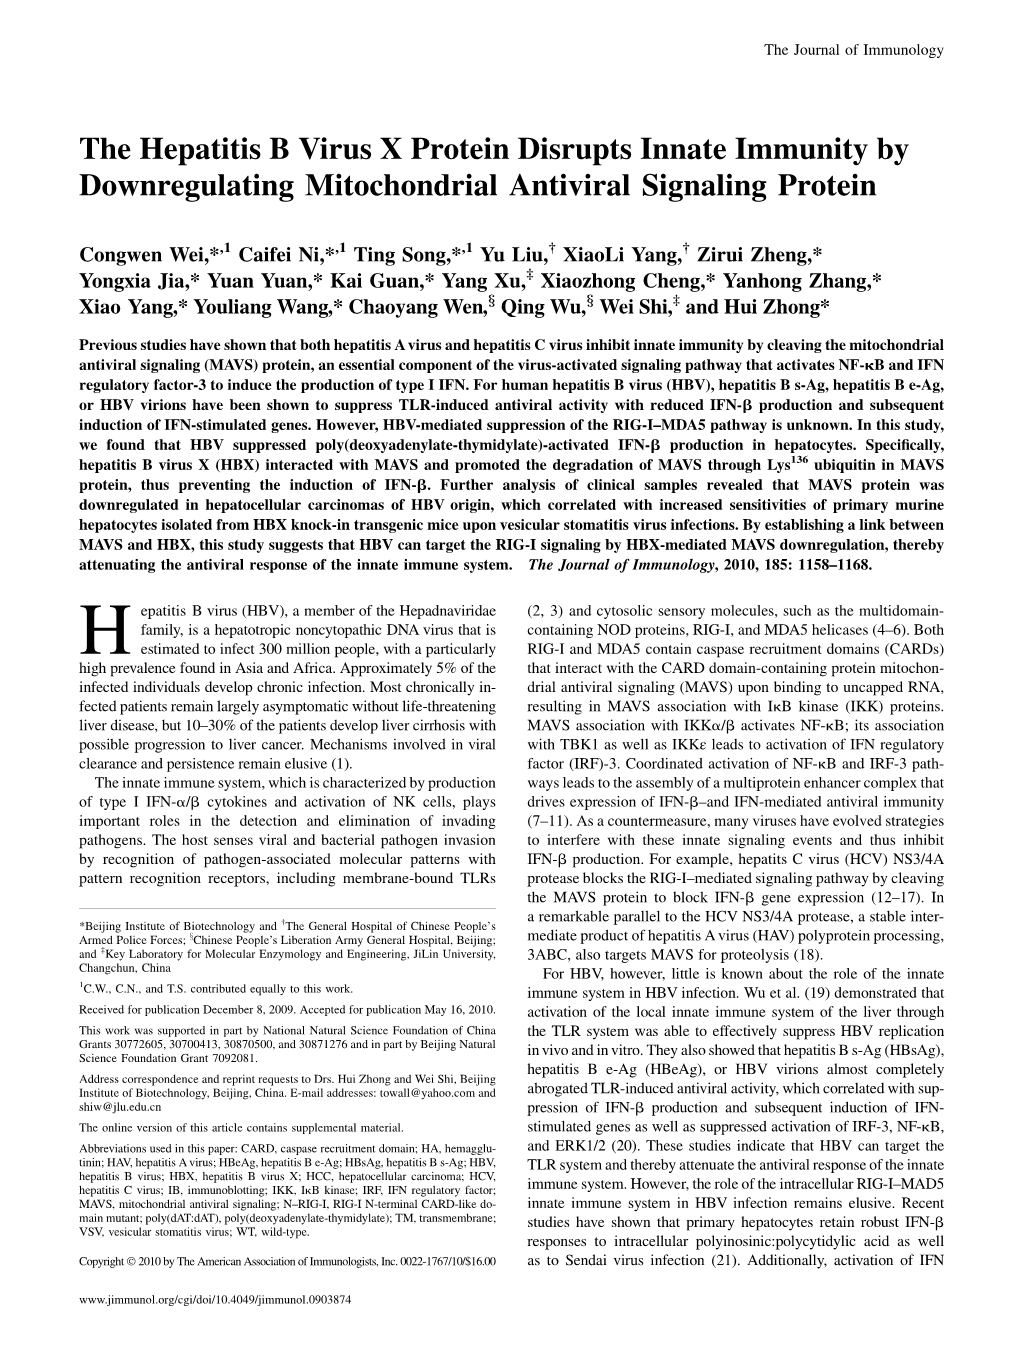 Mitochondrial Antiviral Signaling Protein Innate Immunity By